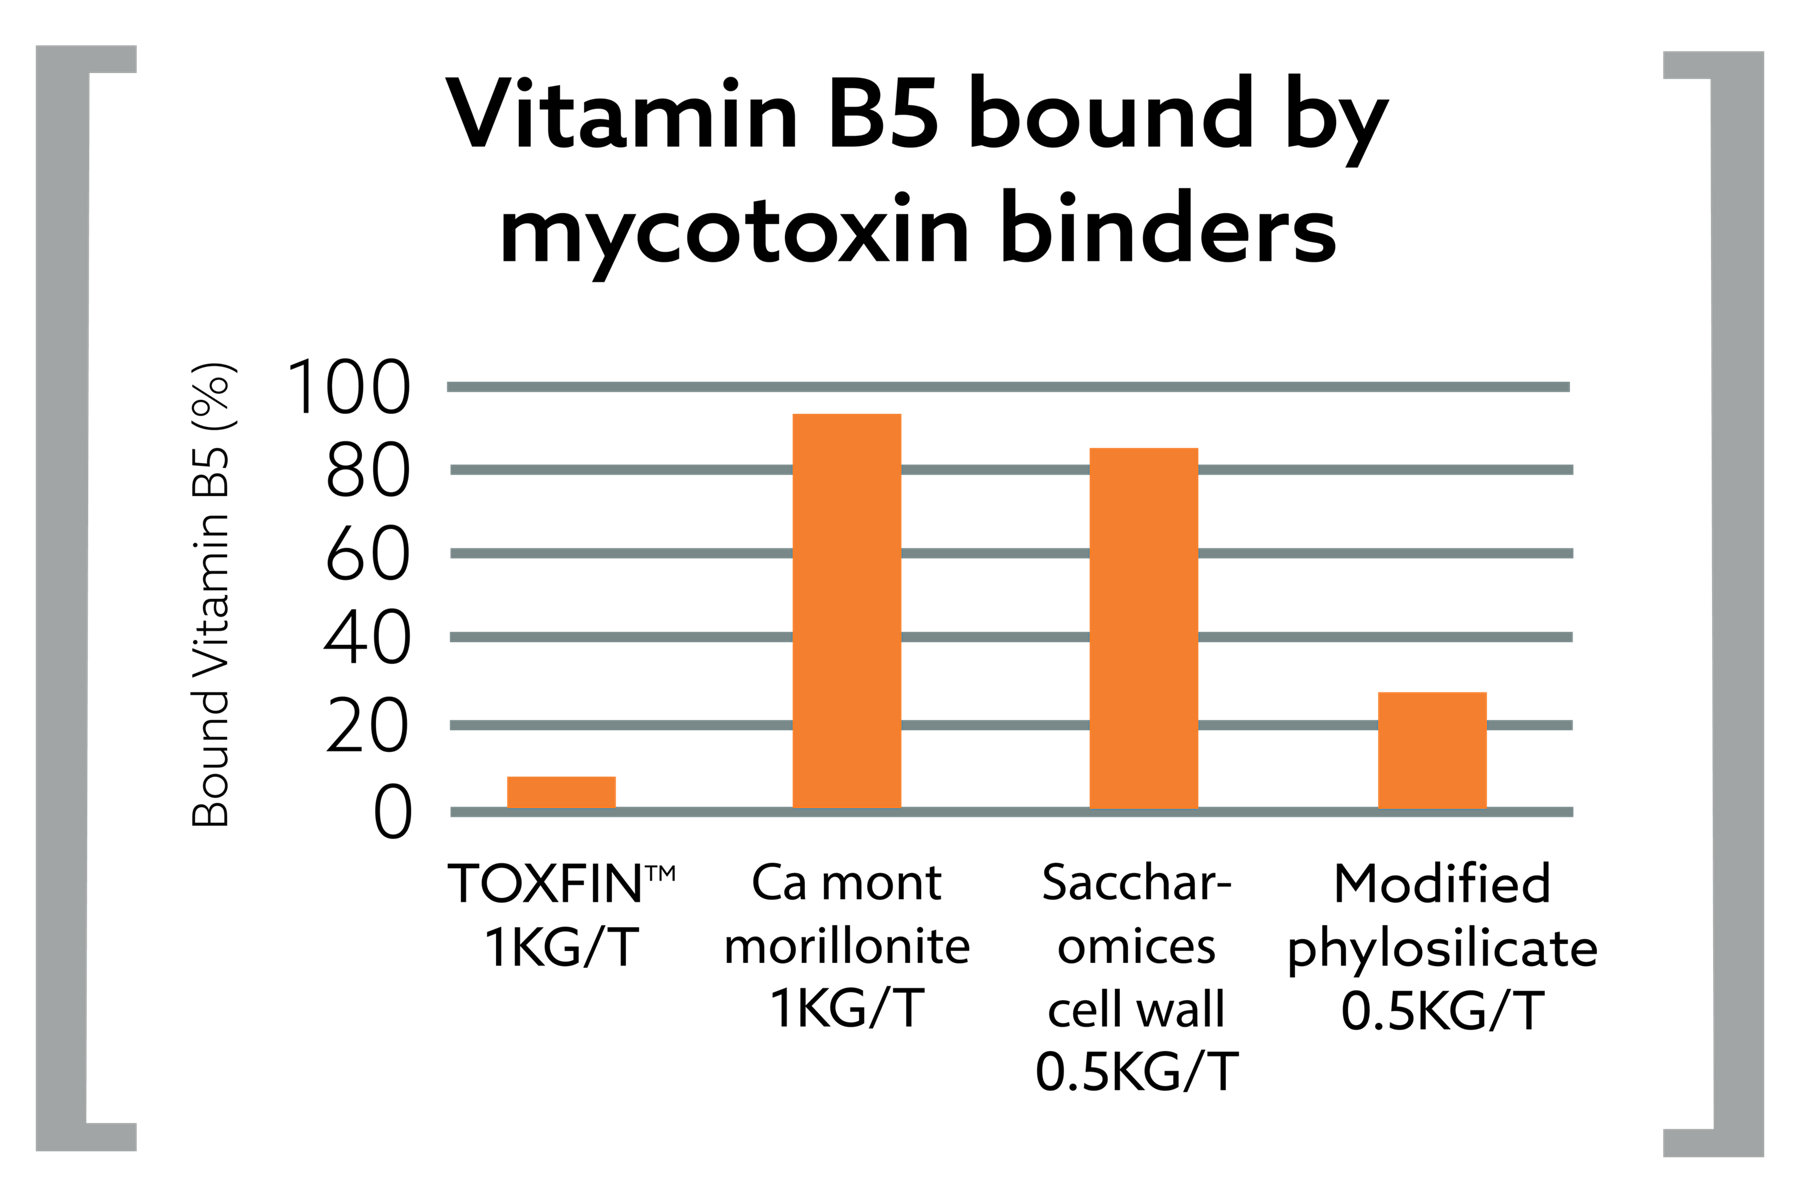 kaa Toxfin Vitamins B5 mycotoxin binders graph